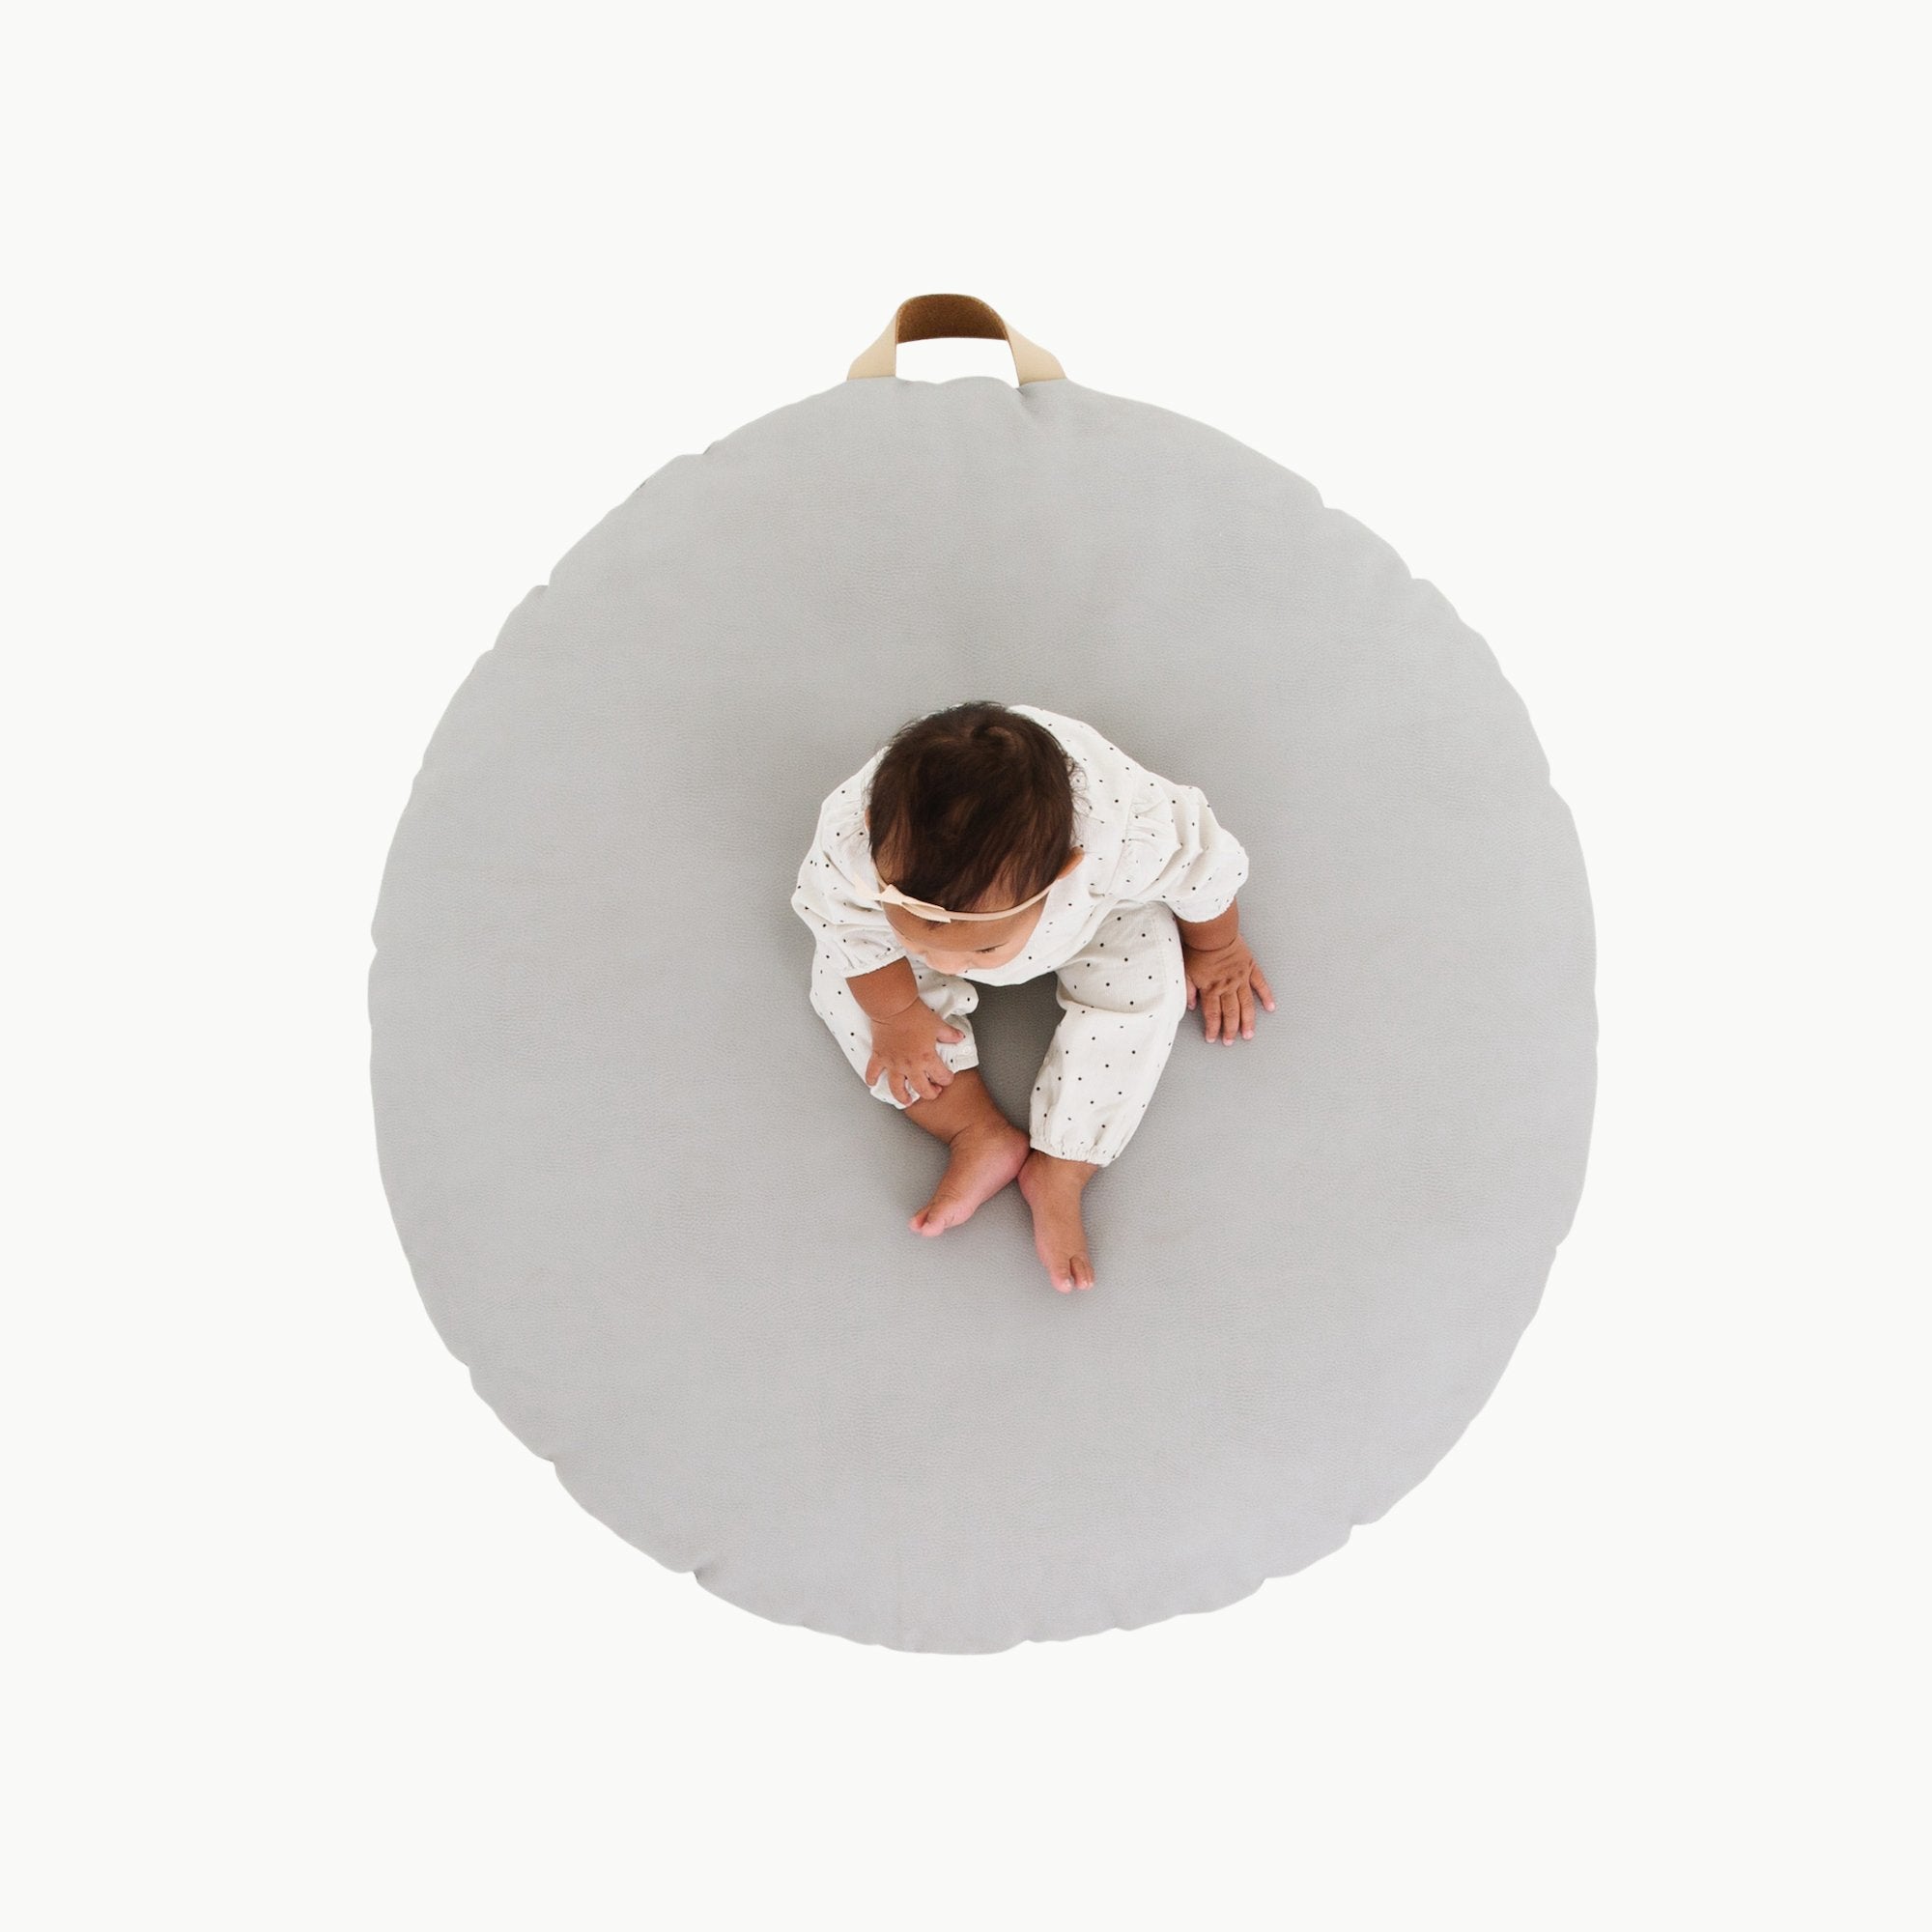 Pewter (on sale) / Circle@Overhead of kid on the Pewter Circle Floor Cushion